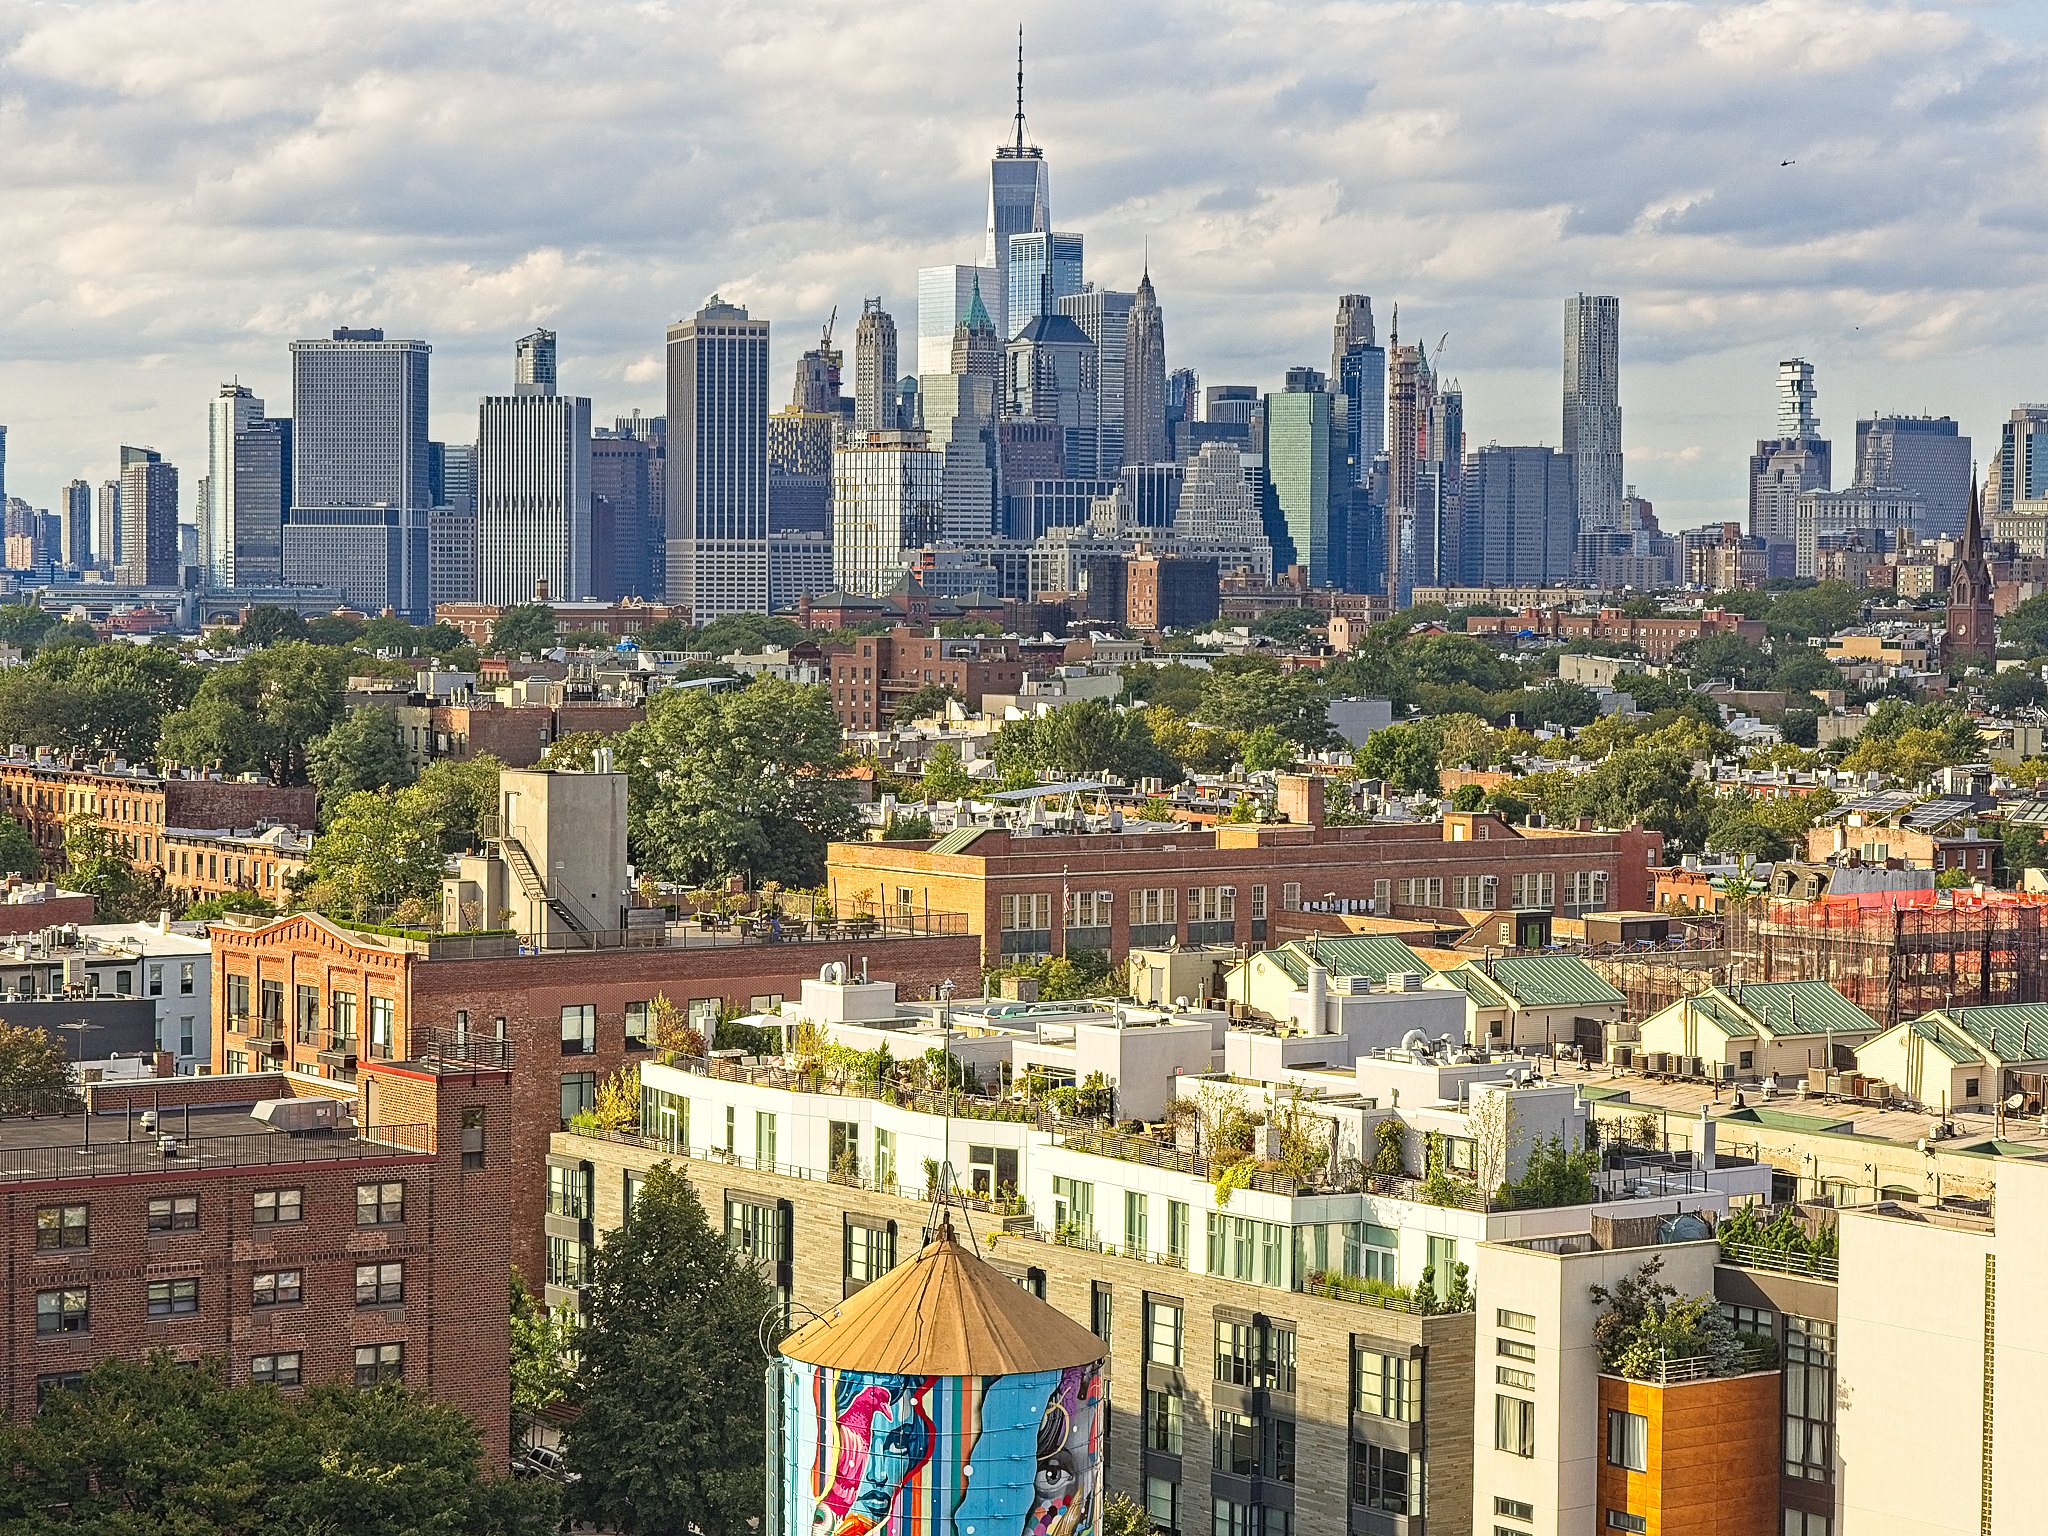 An image of the New York City skyline.